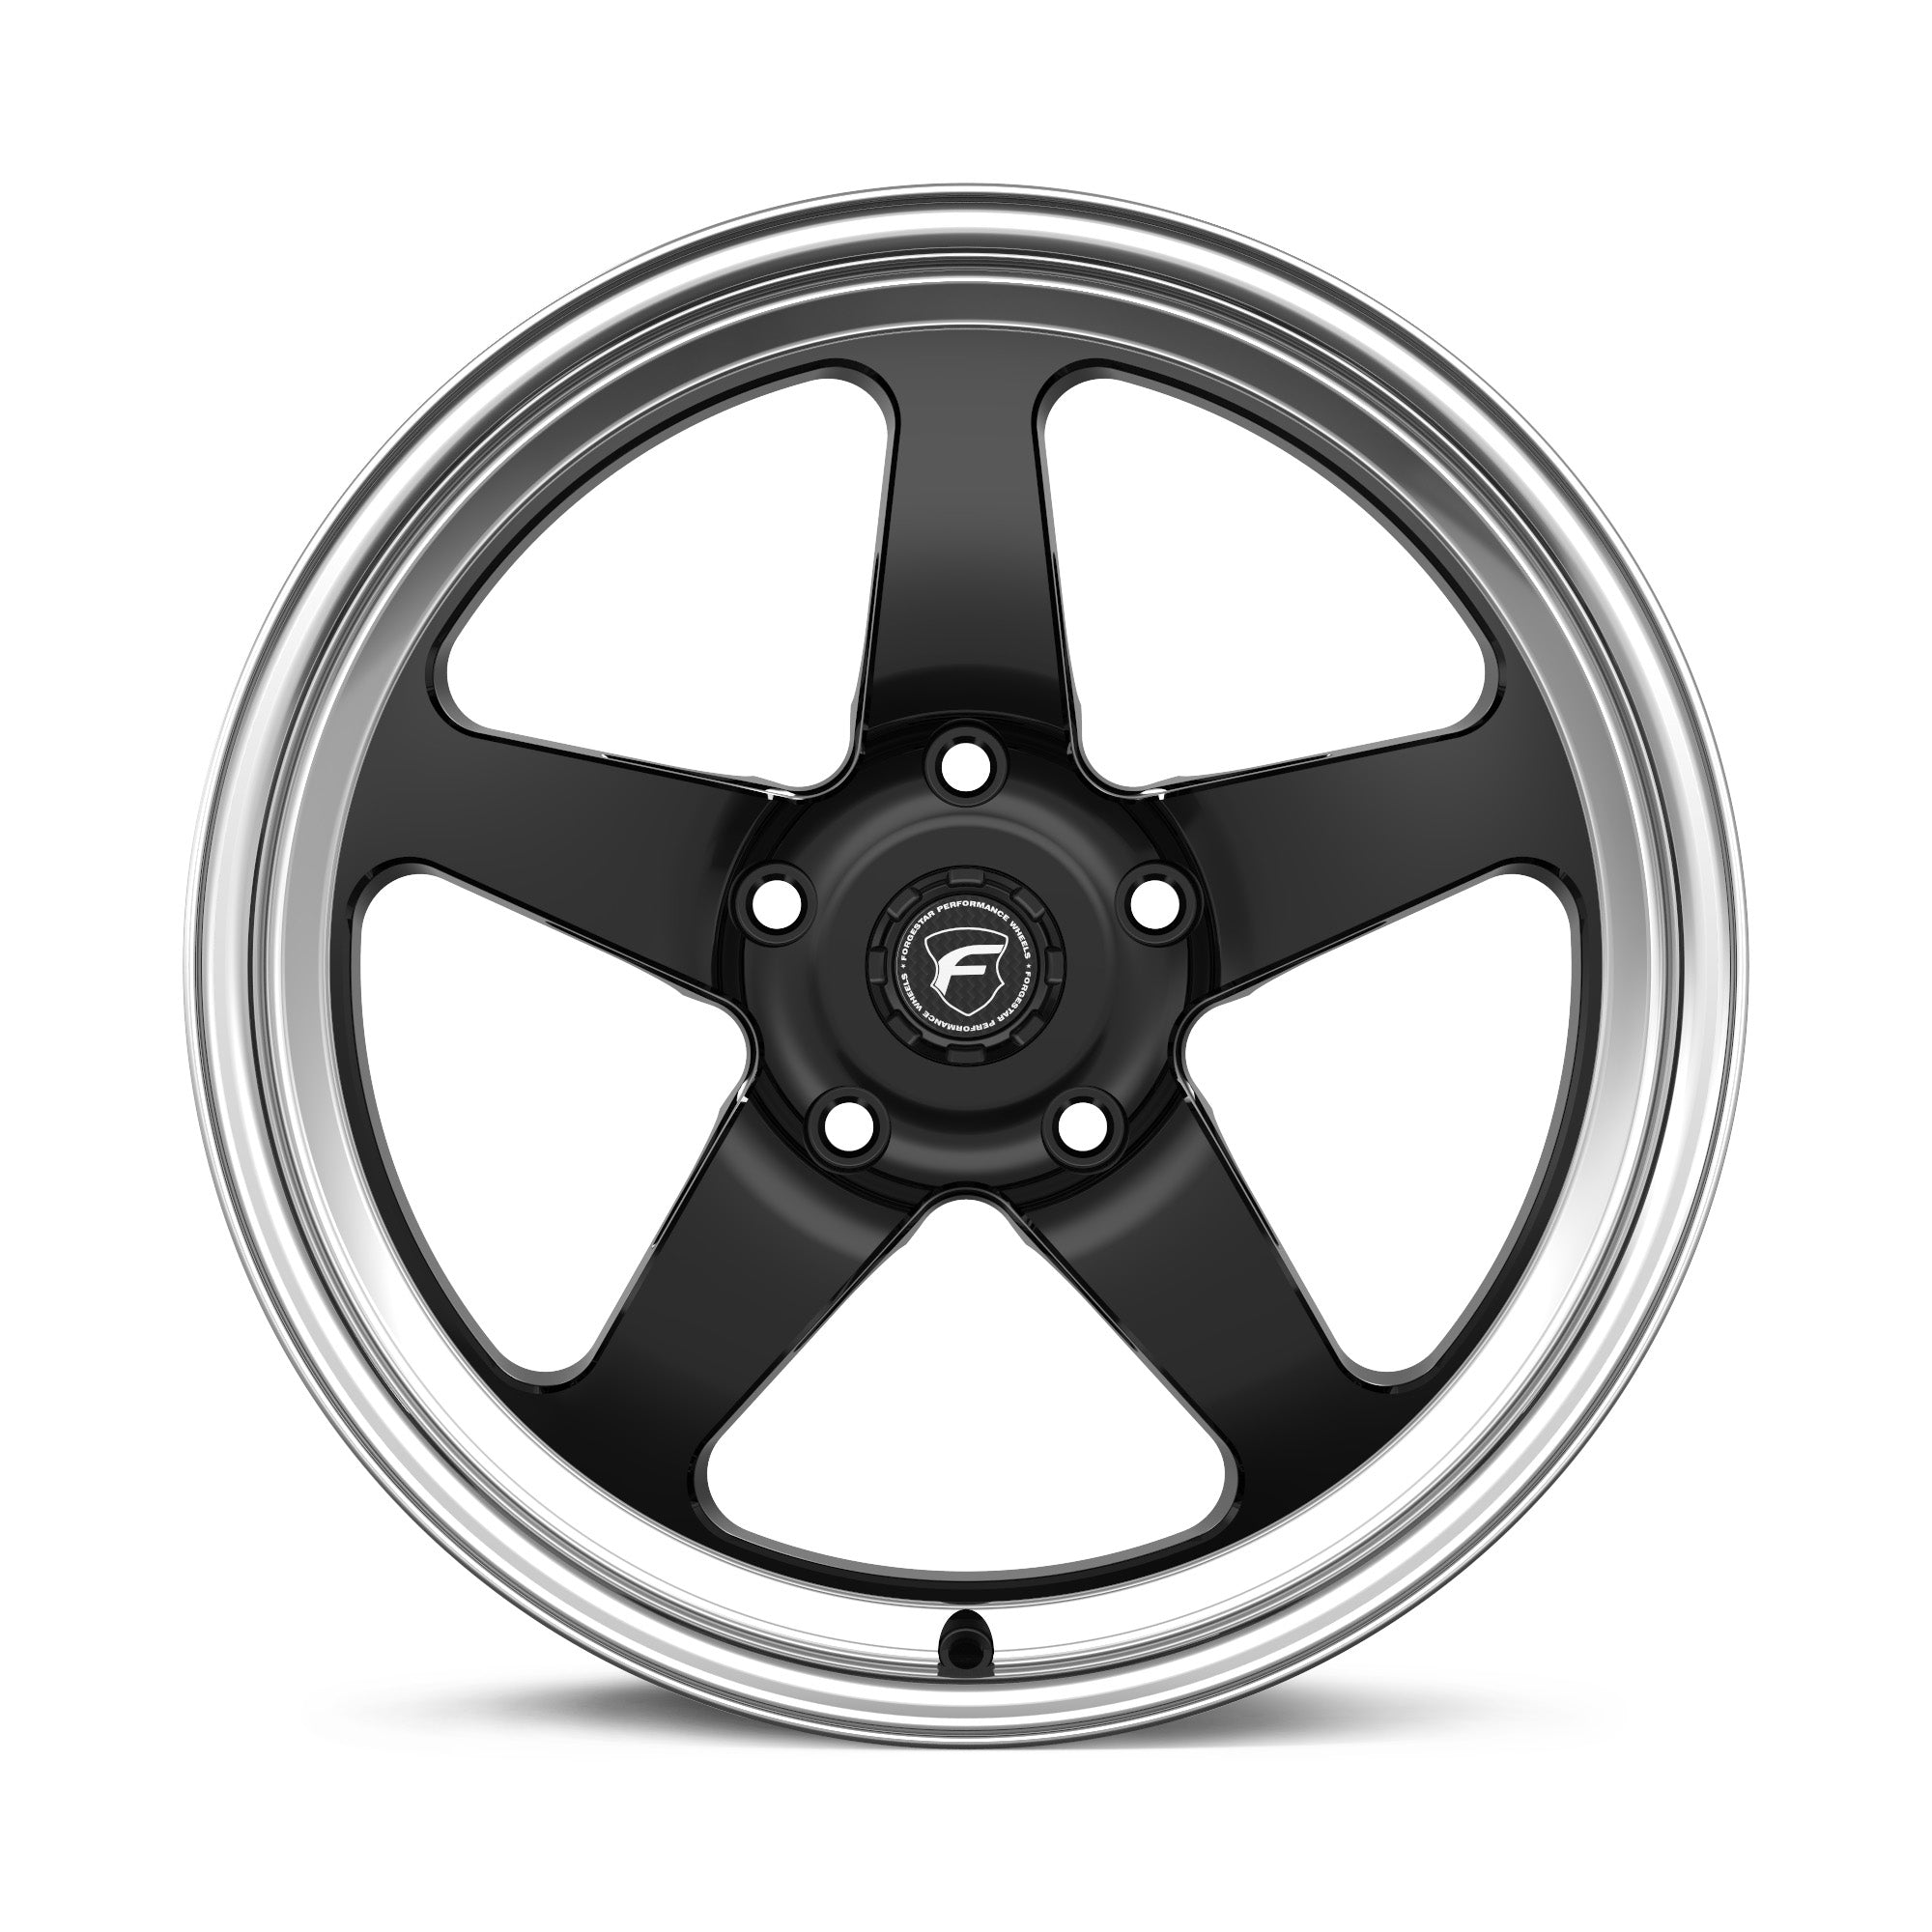 Forgestar D5 Drag Racing Wheels - Gloss Black w/Machined Lip - 18x12 - Sold Individually - Motorsports LA